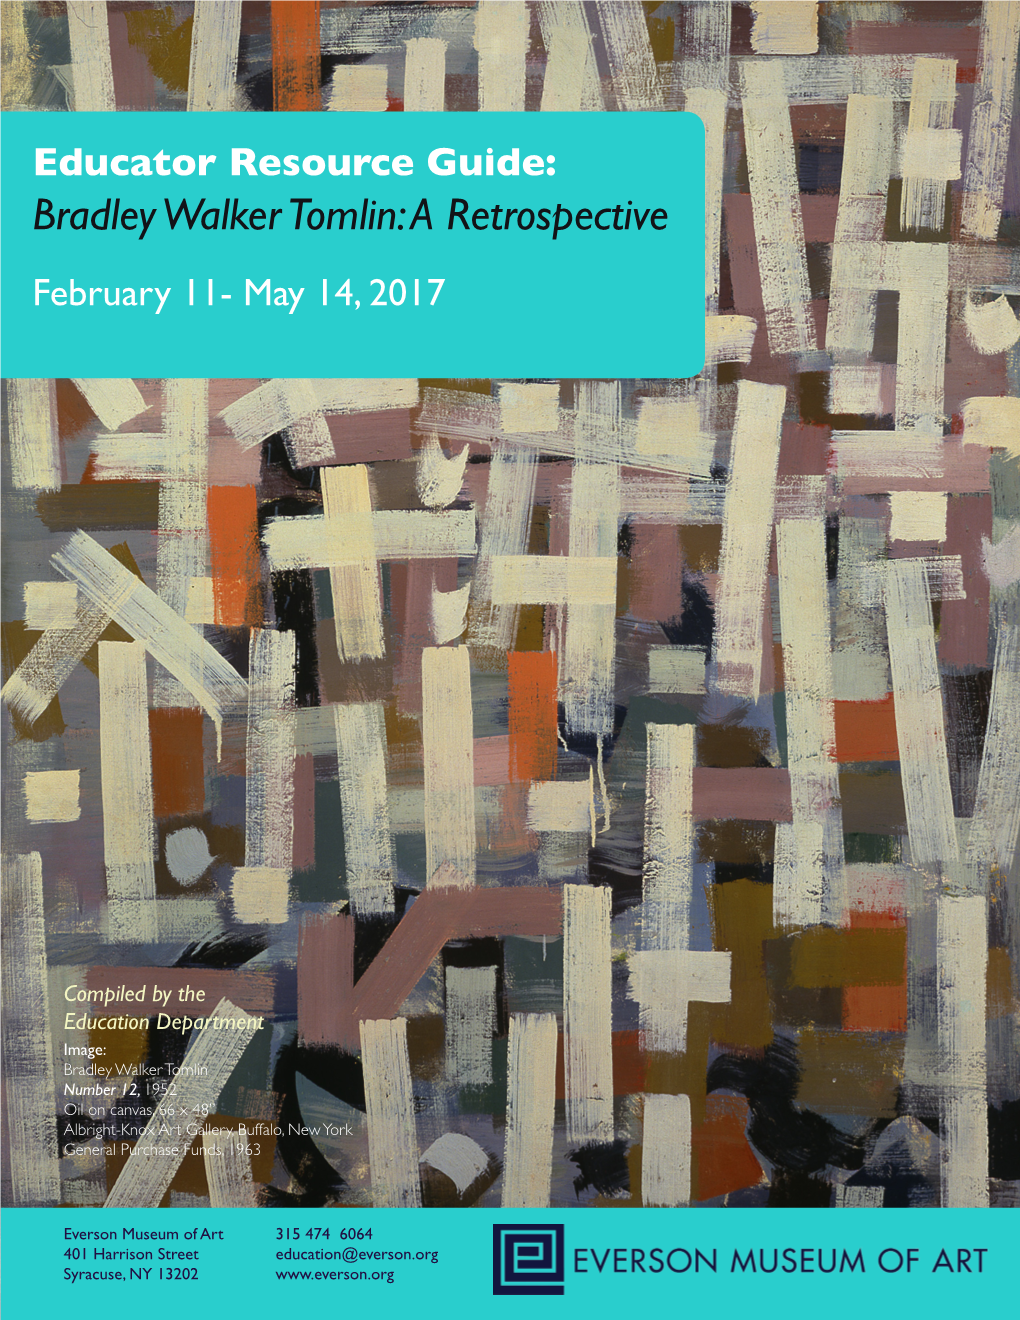 Bradley Walker Tomlin: a Retrospective February 11- May 14, 2017